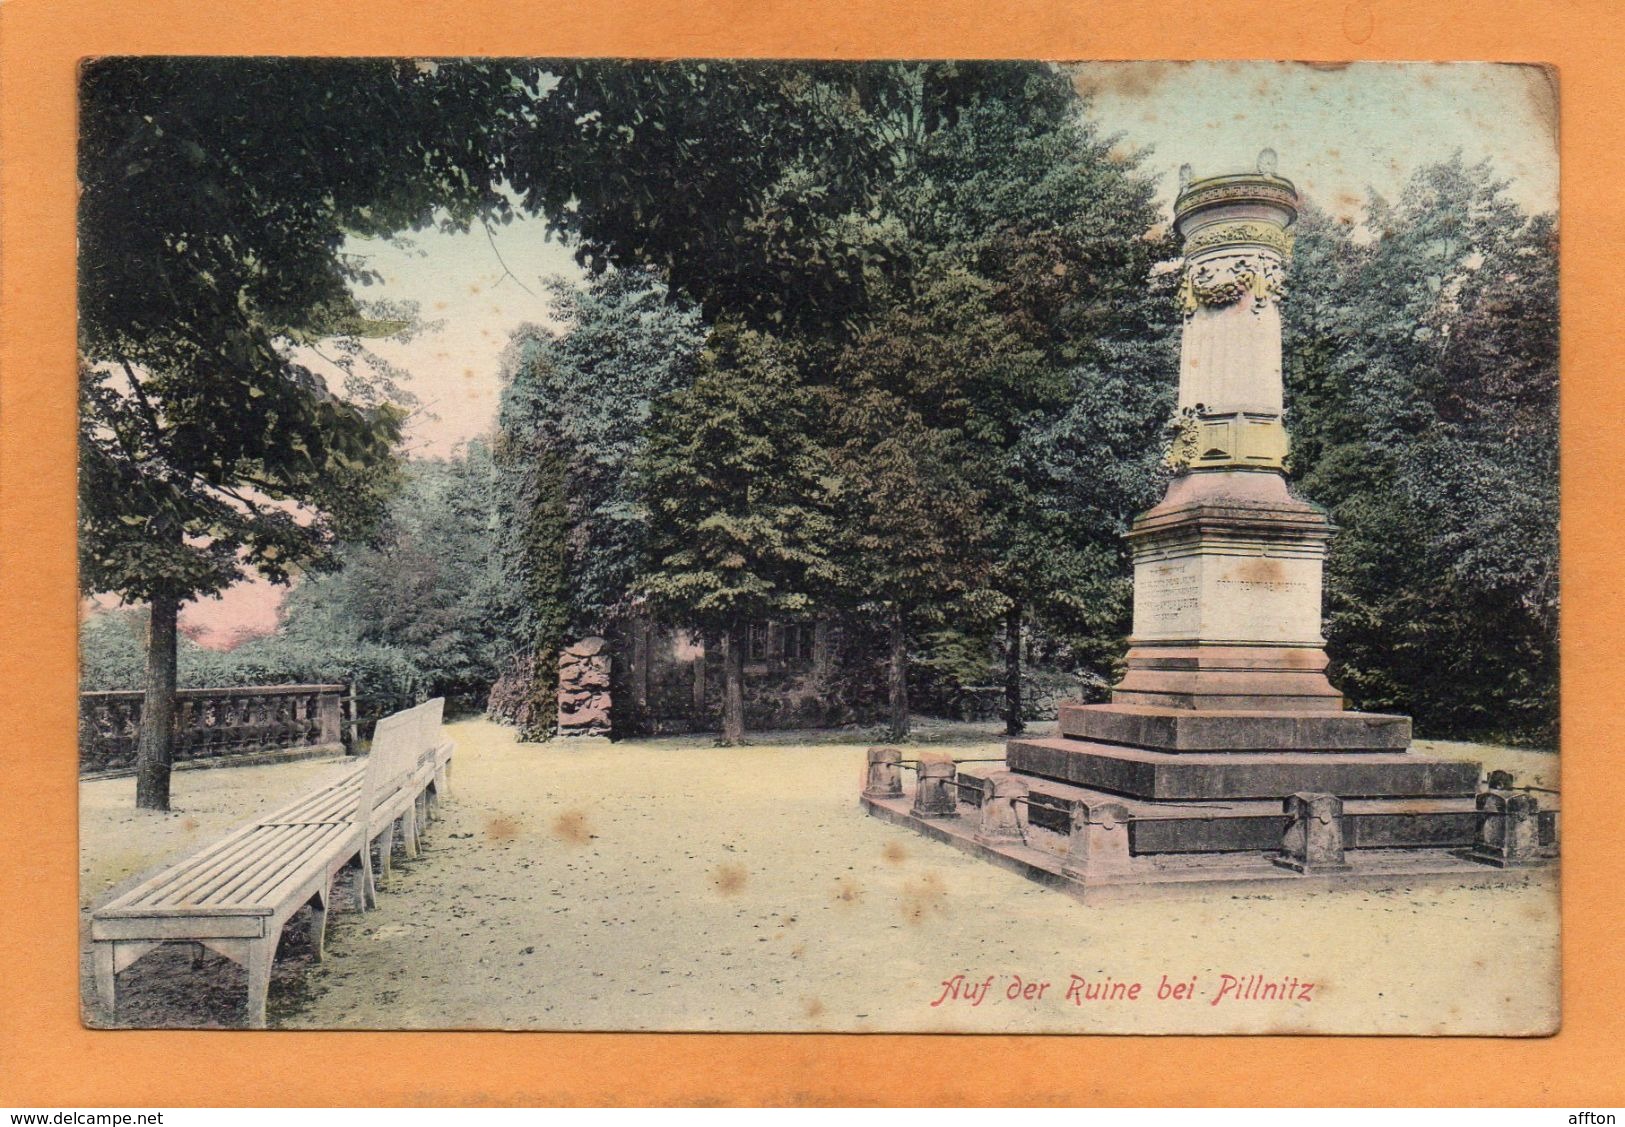 Pillnitz 1919 Postcard - Pillnitz